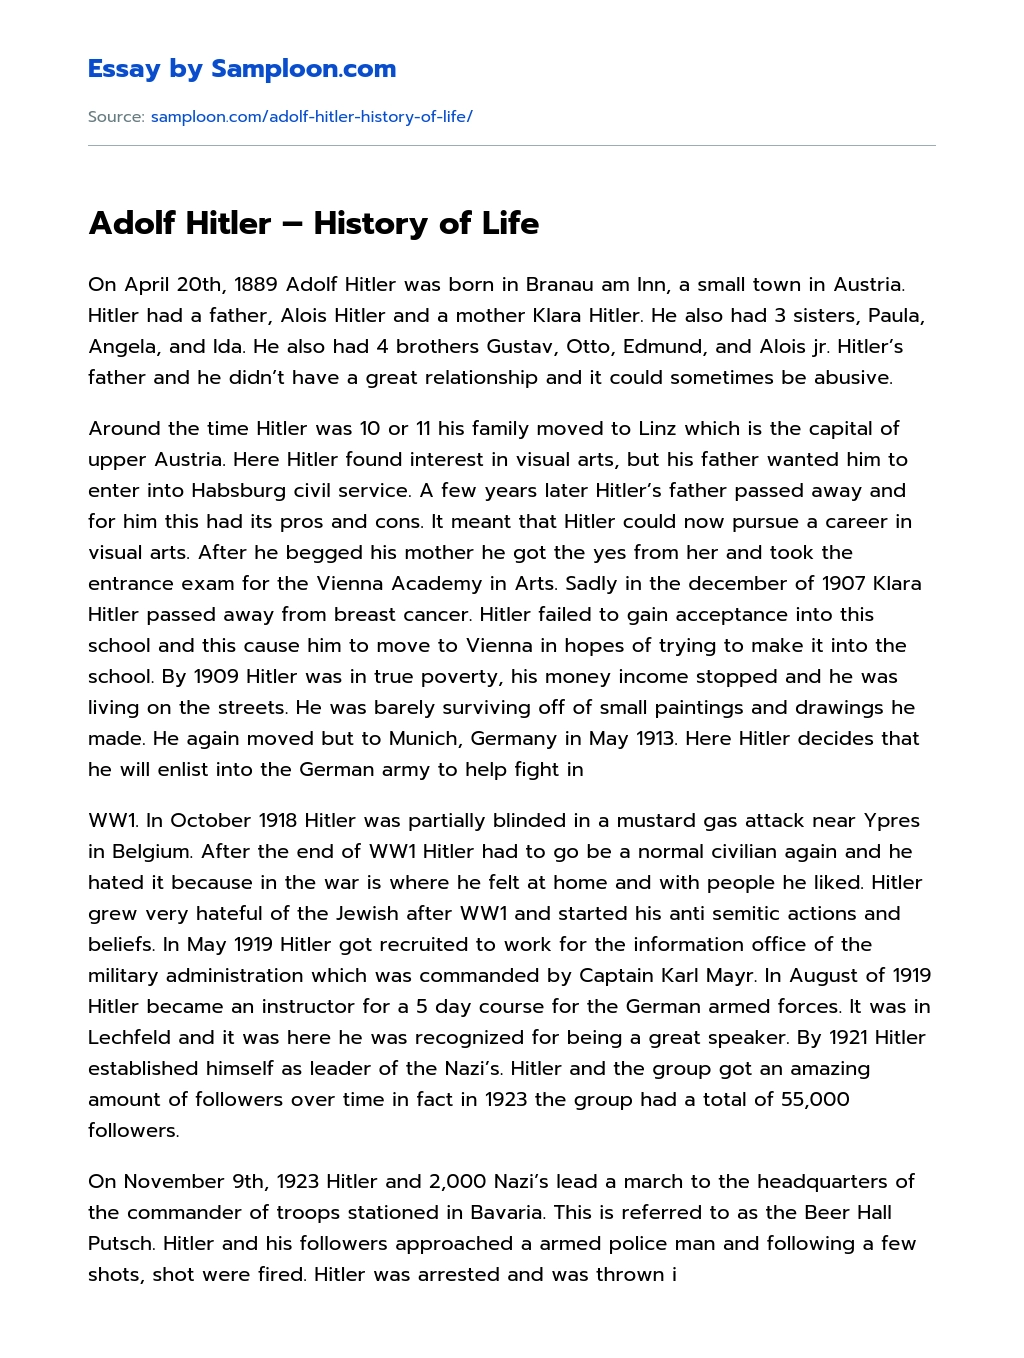 Adolf Hitler – History of Life essay